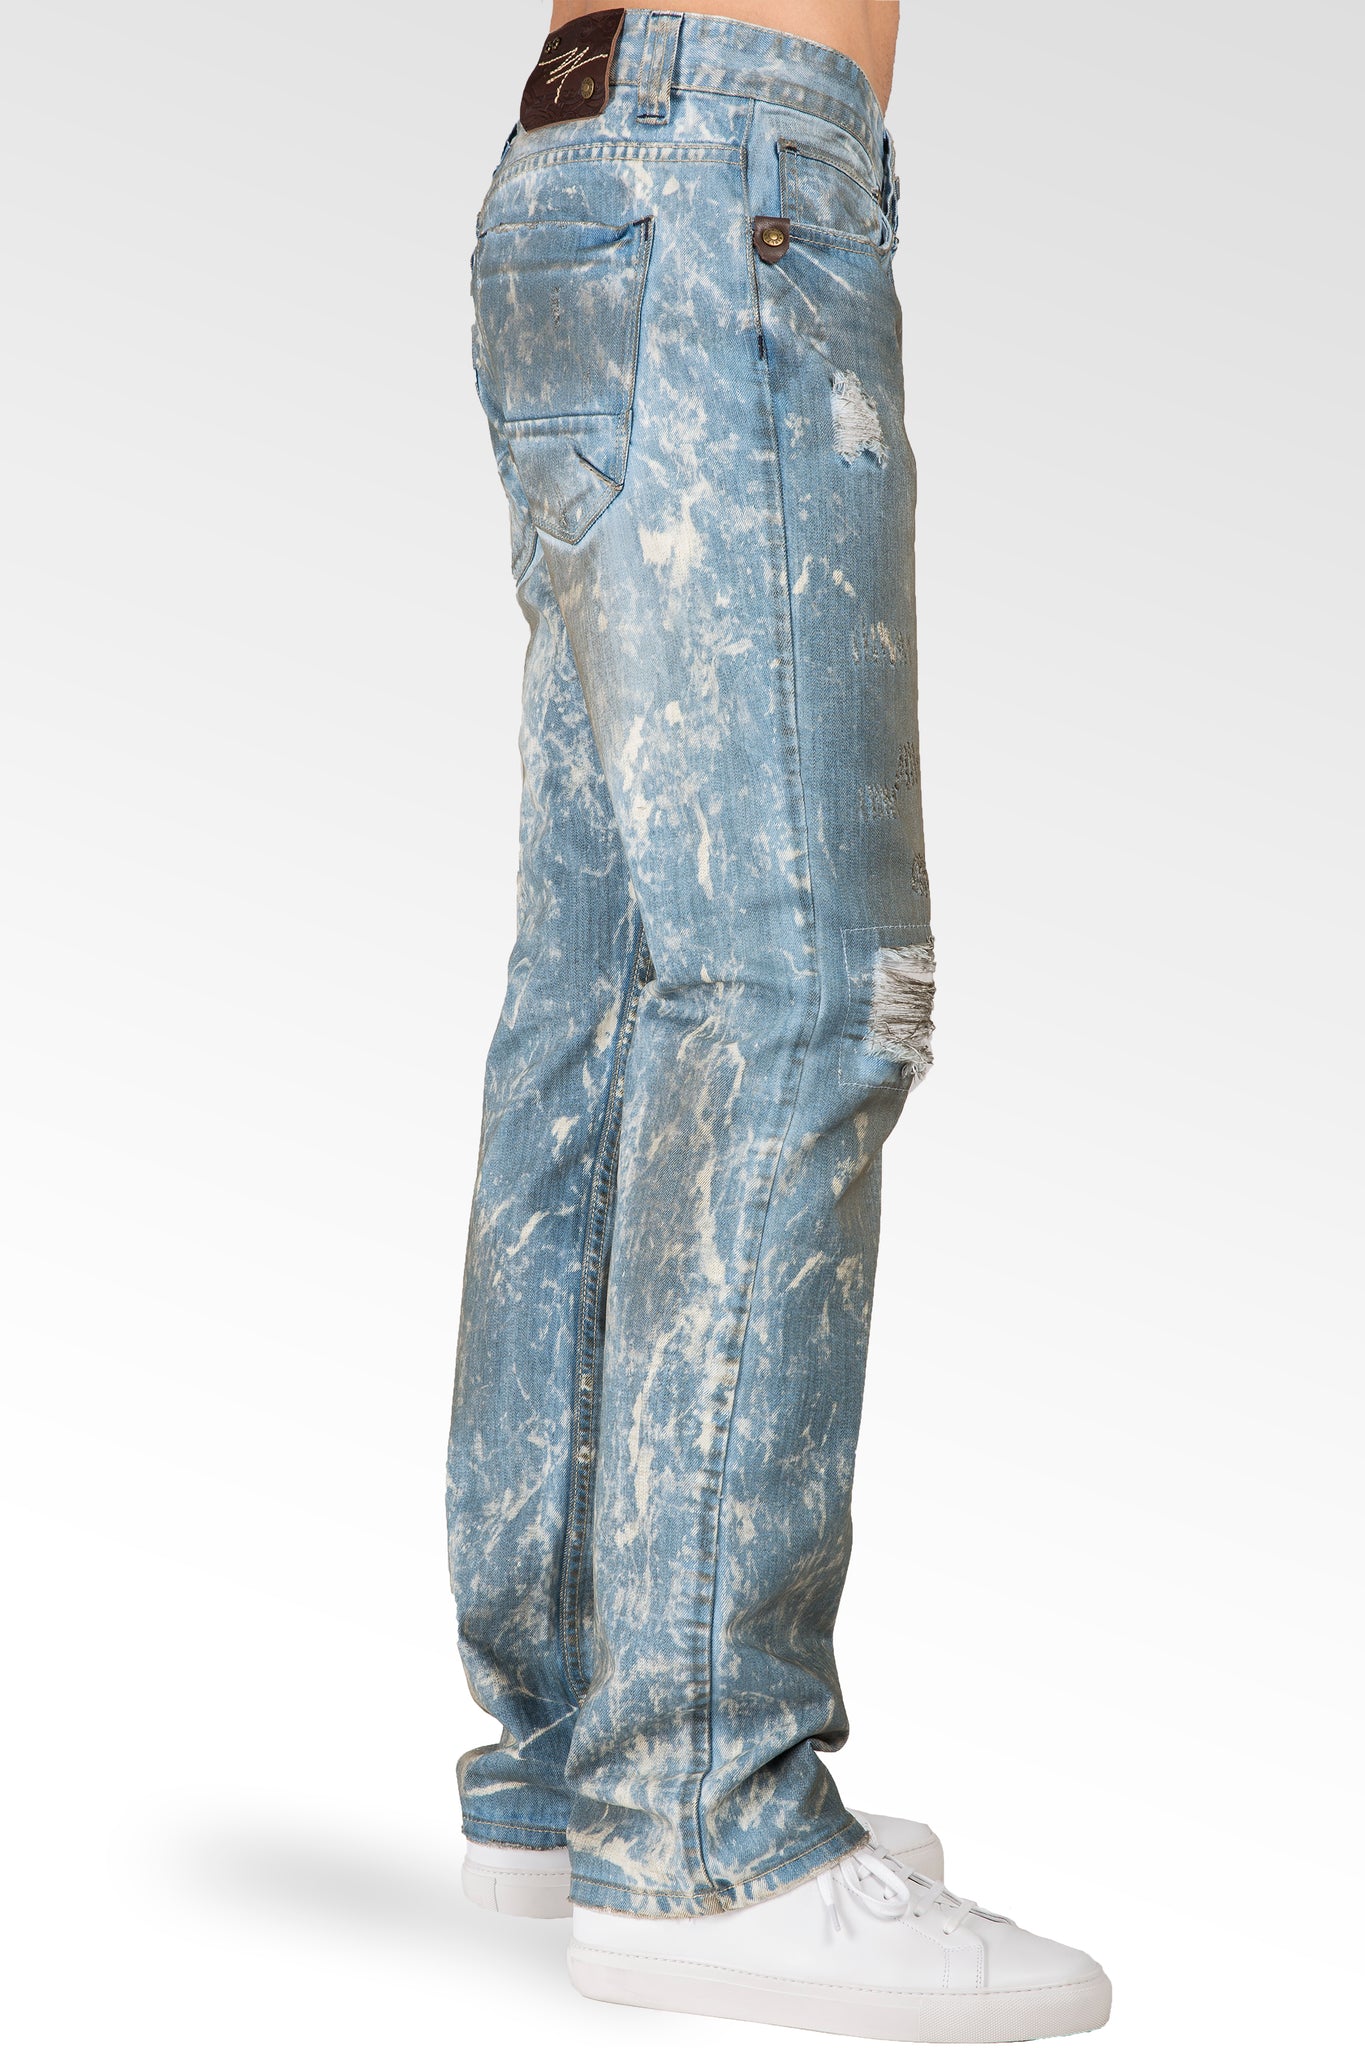 Slim Straight Distressed Bleached Blue Premium Denim Signature 5 Pocket Jeans Paint Splatter